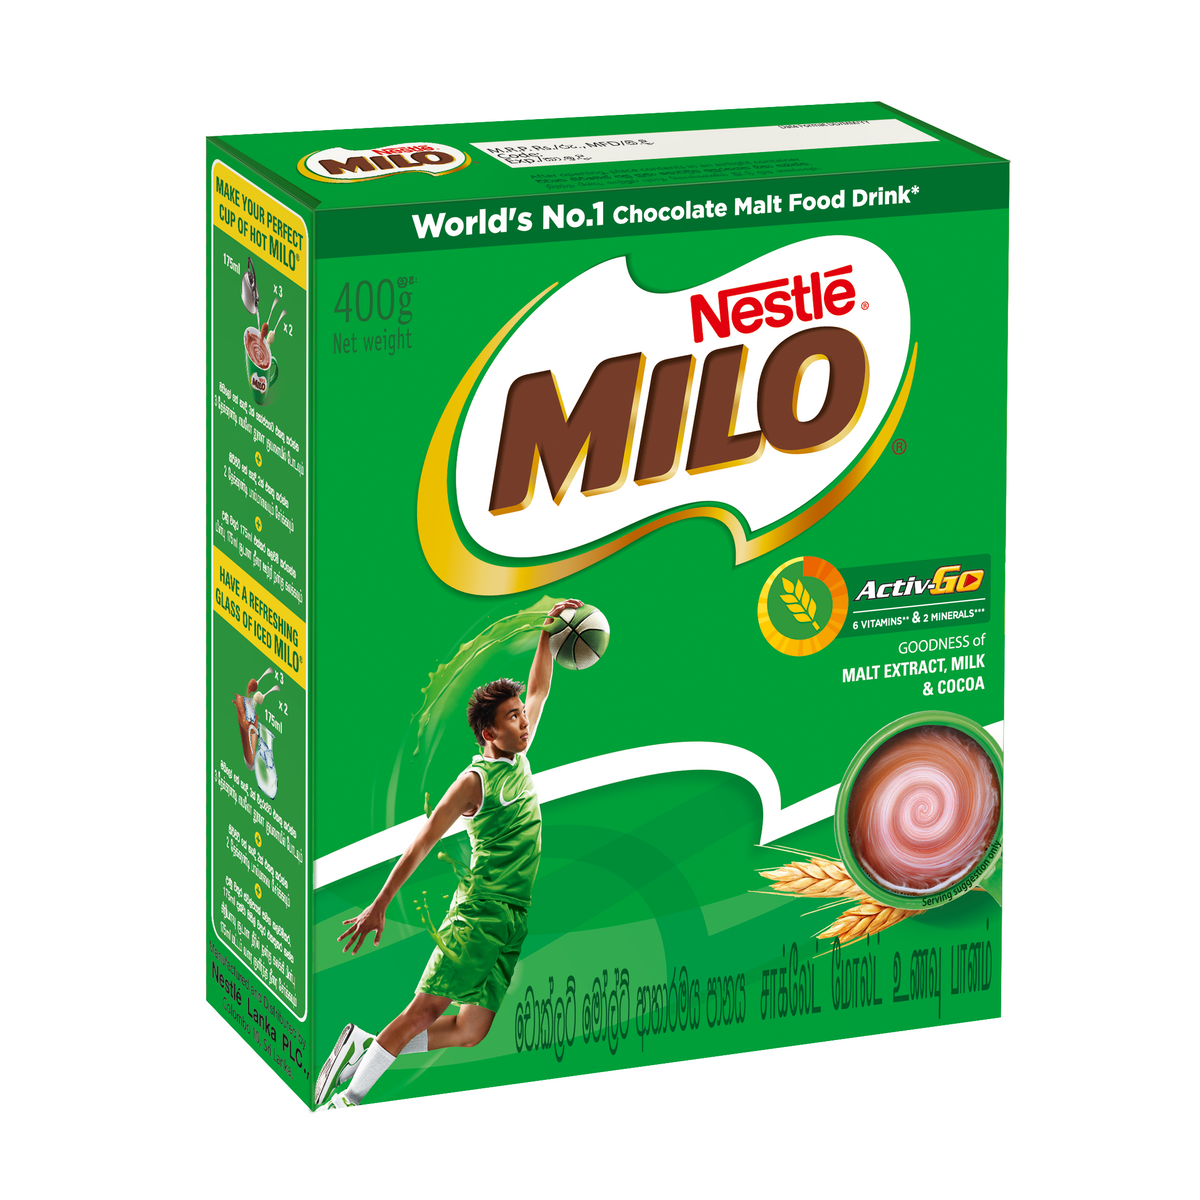 Шел шоколад. Milo напиток. Milo (Chocolate Bar). Nestomalt. 400 Мило.